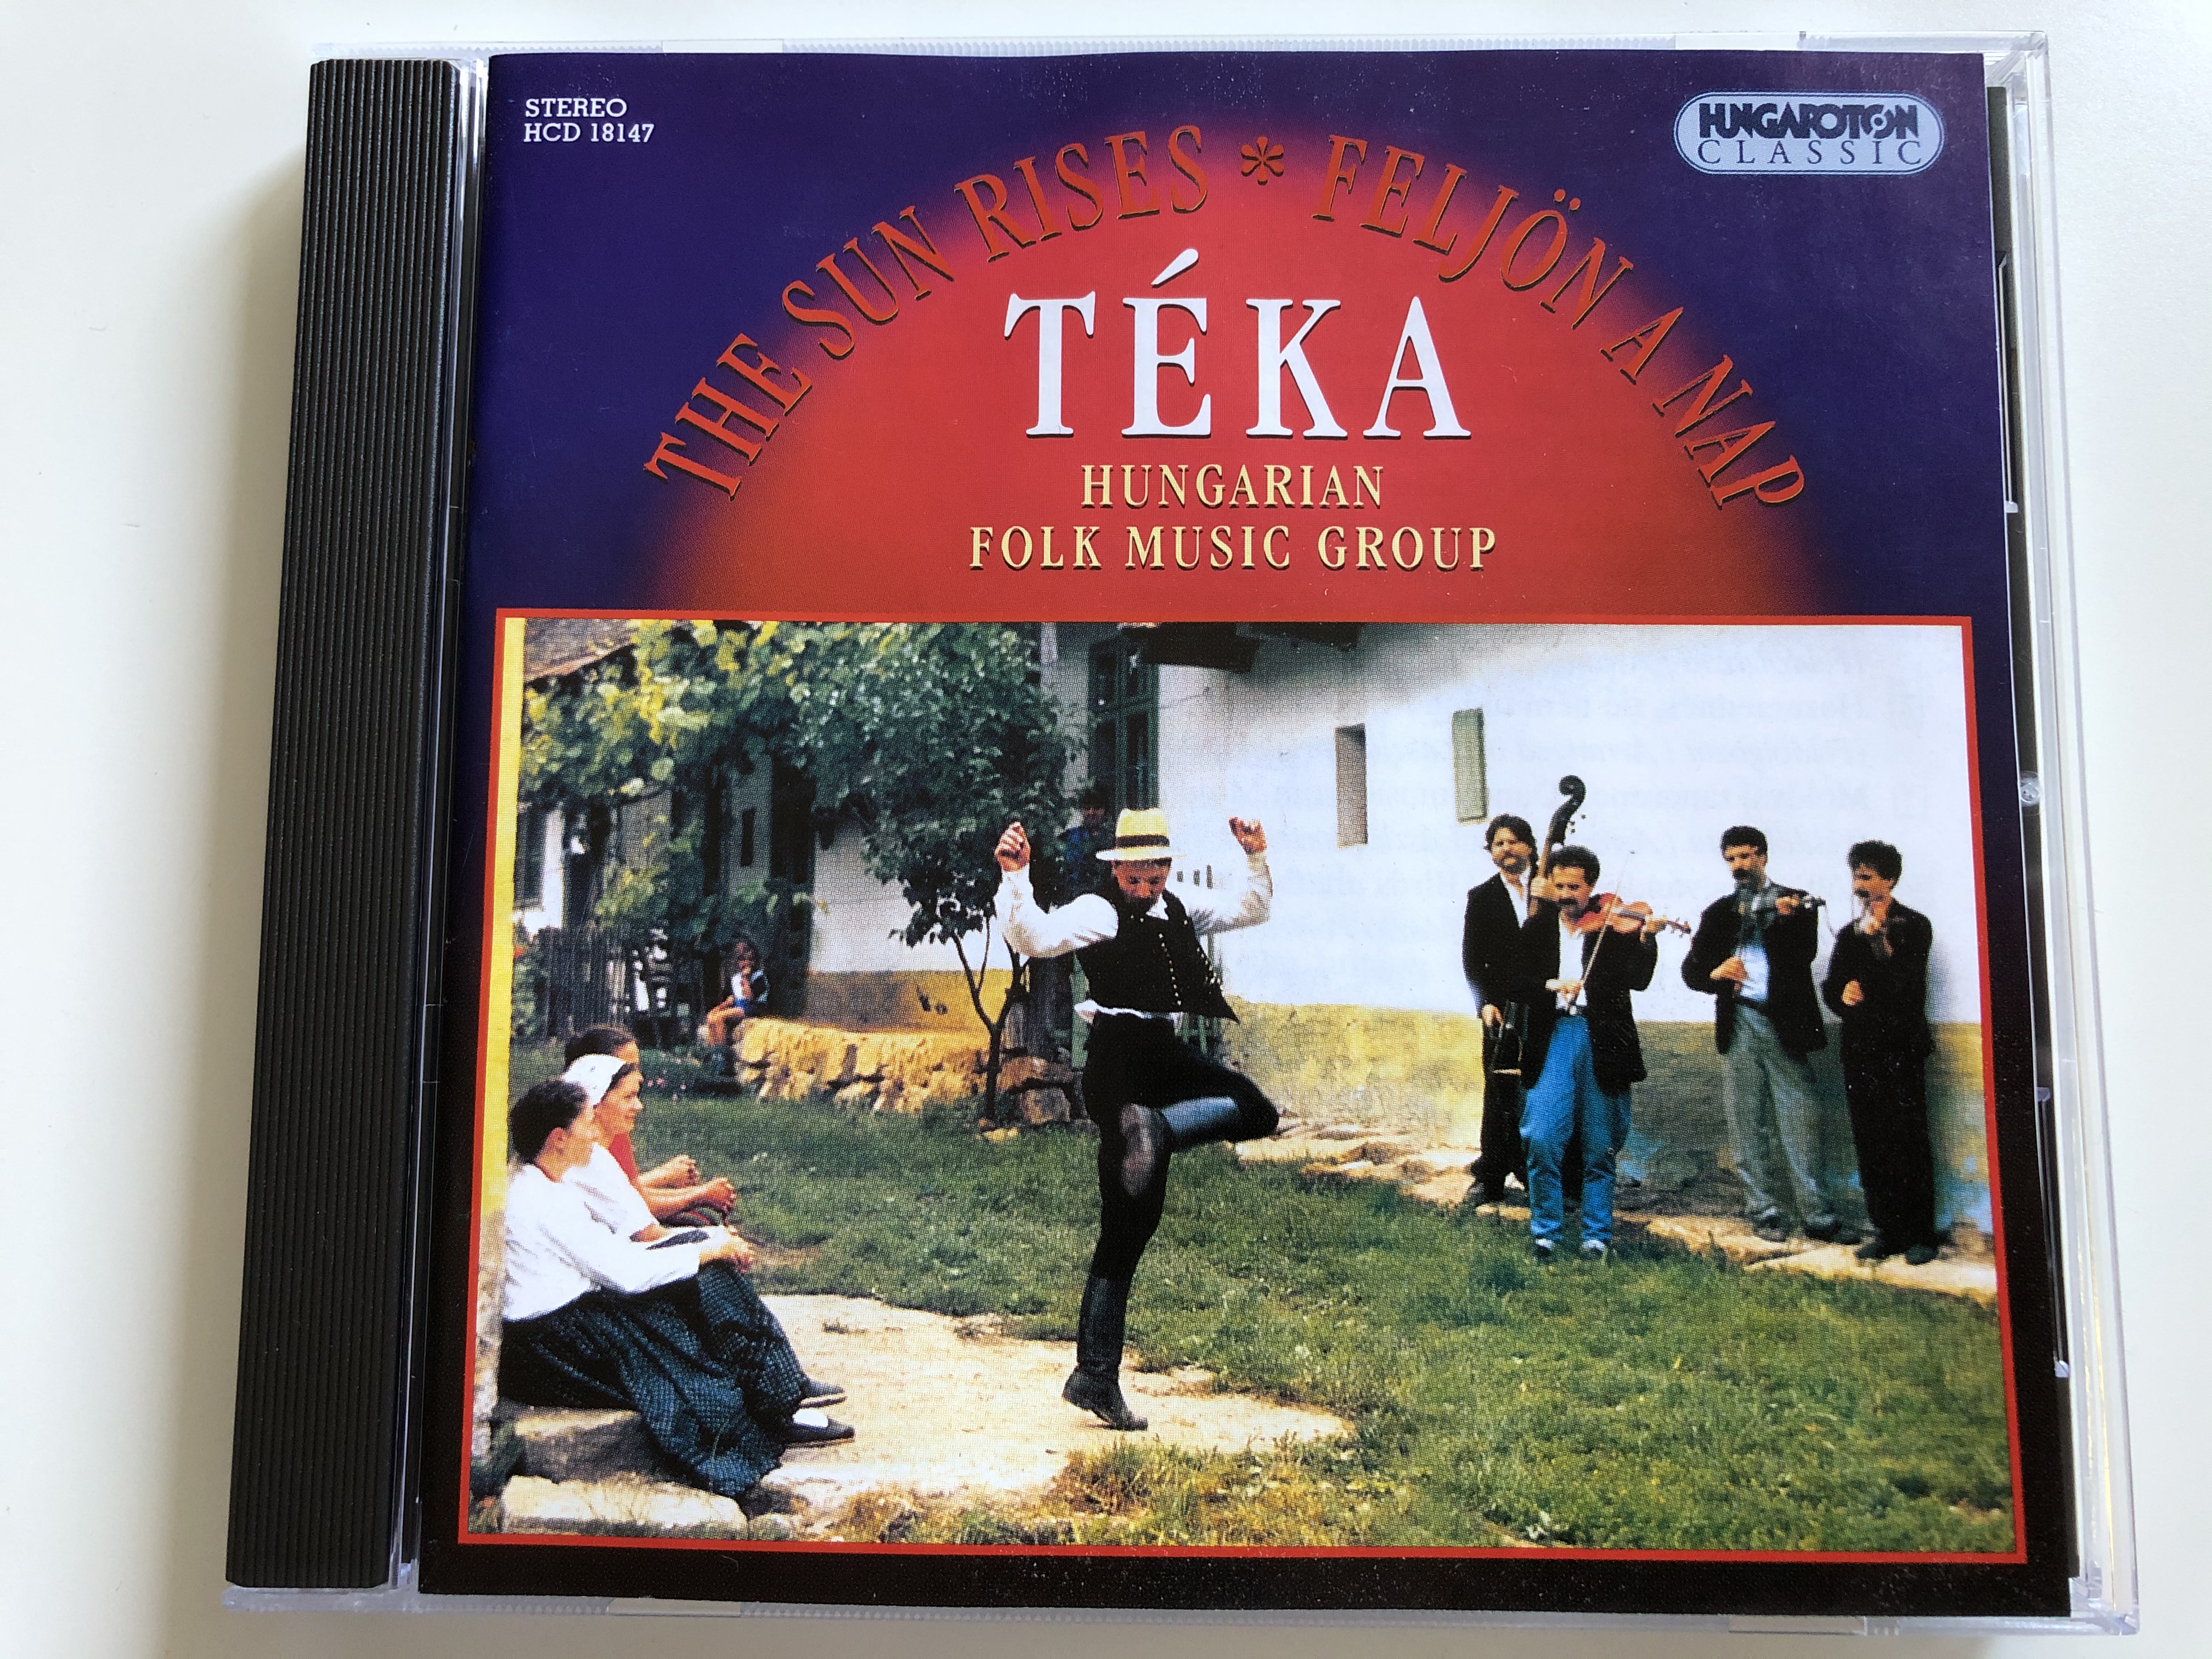 the-sun-rises-feljon-a-nap-teka-hungarian-folk-music-group-hungaroton-classic-audio-cd-1989-stereo-hcd-18147-1-.jpg